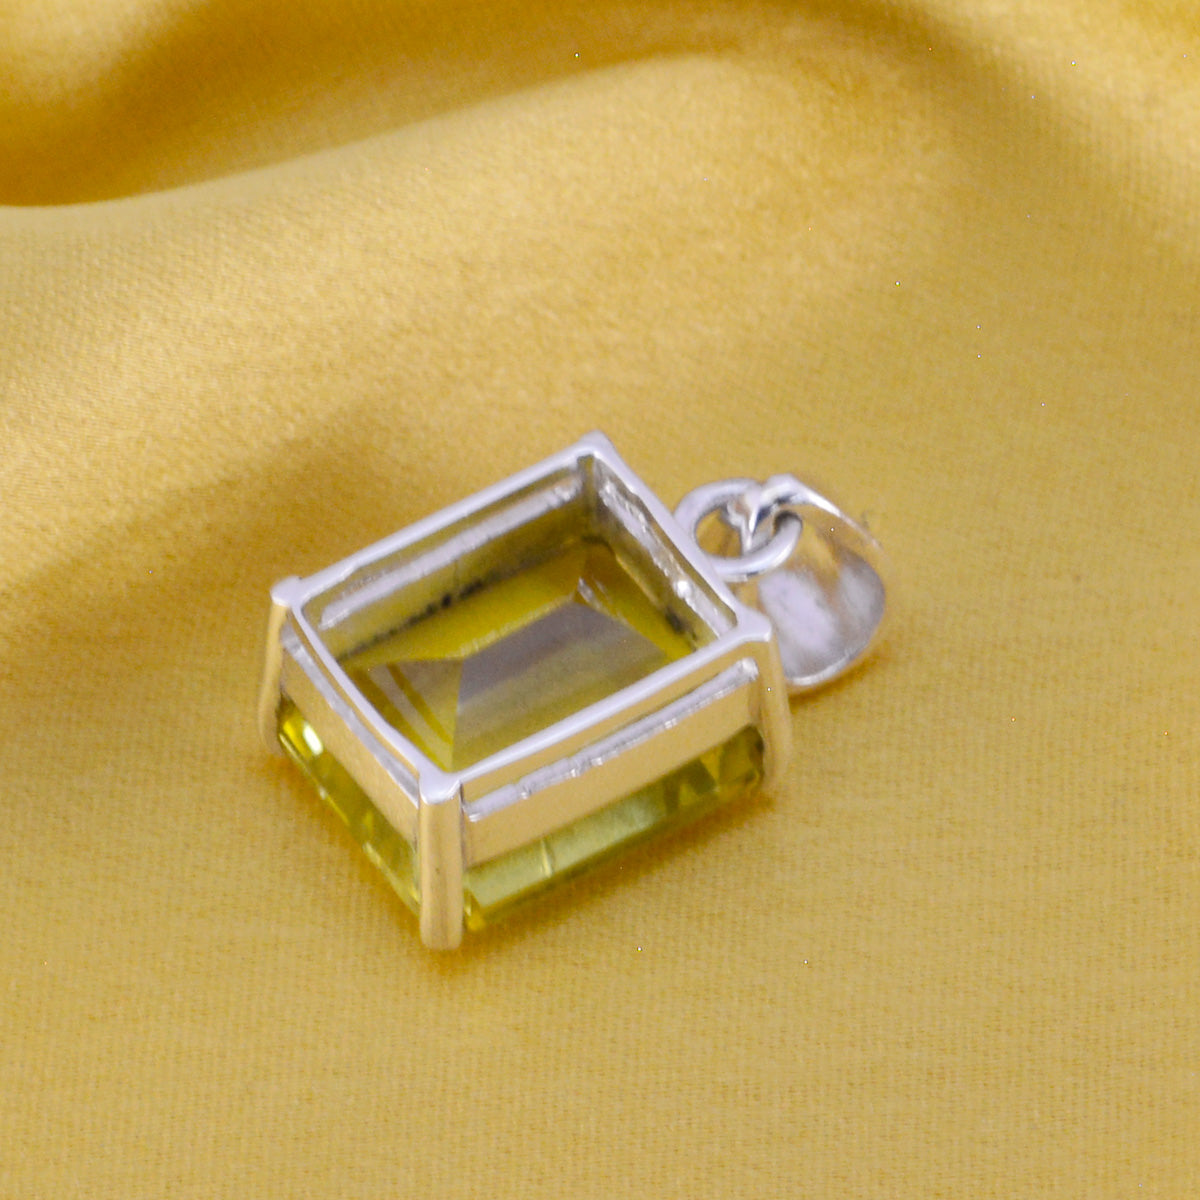 Riyo Good Gemstones Octogon Faceted Yellow Lemon Quartz 925 Sterling Silver Pendant gift for wife